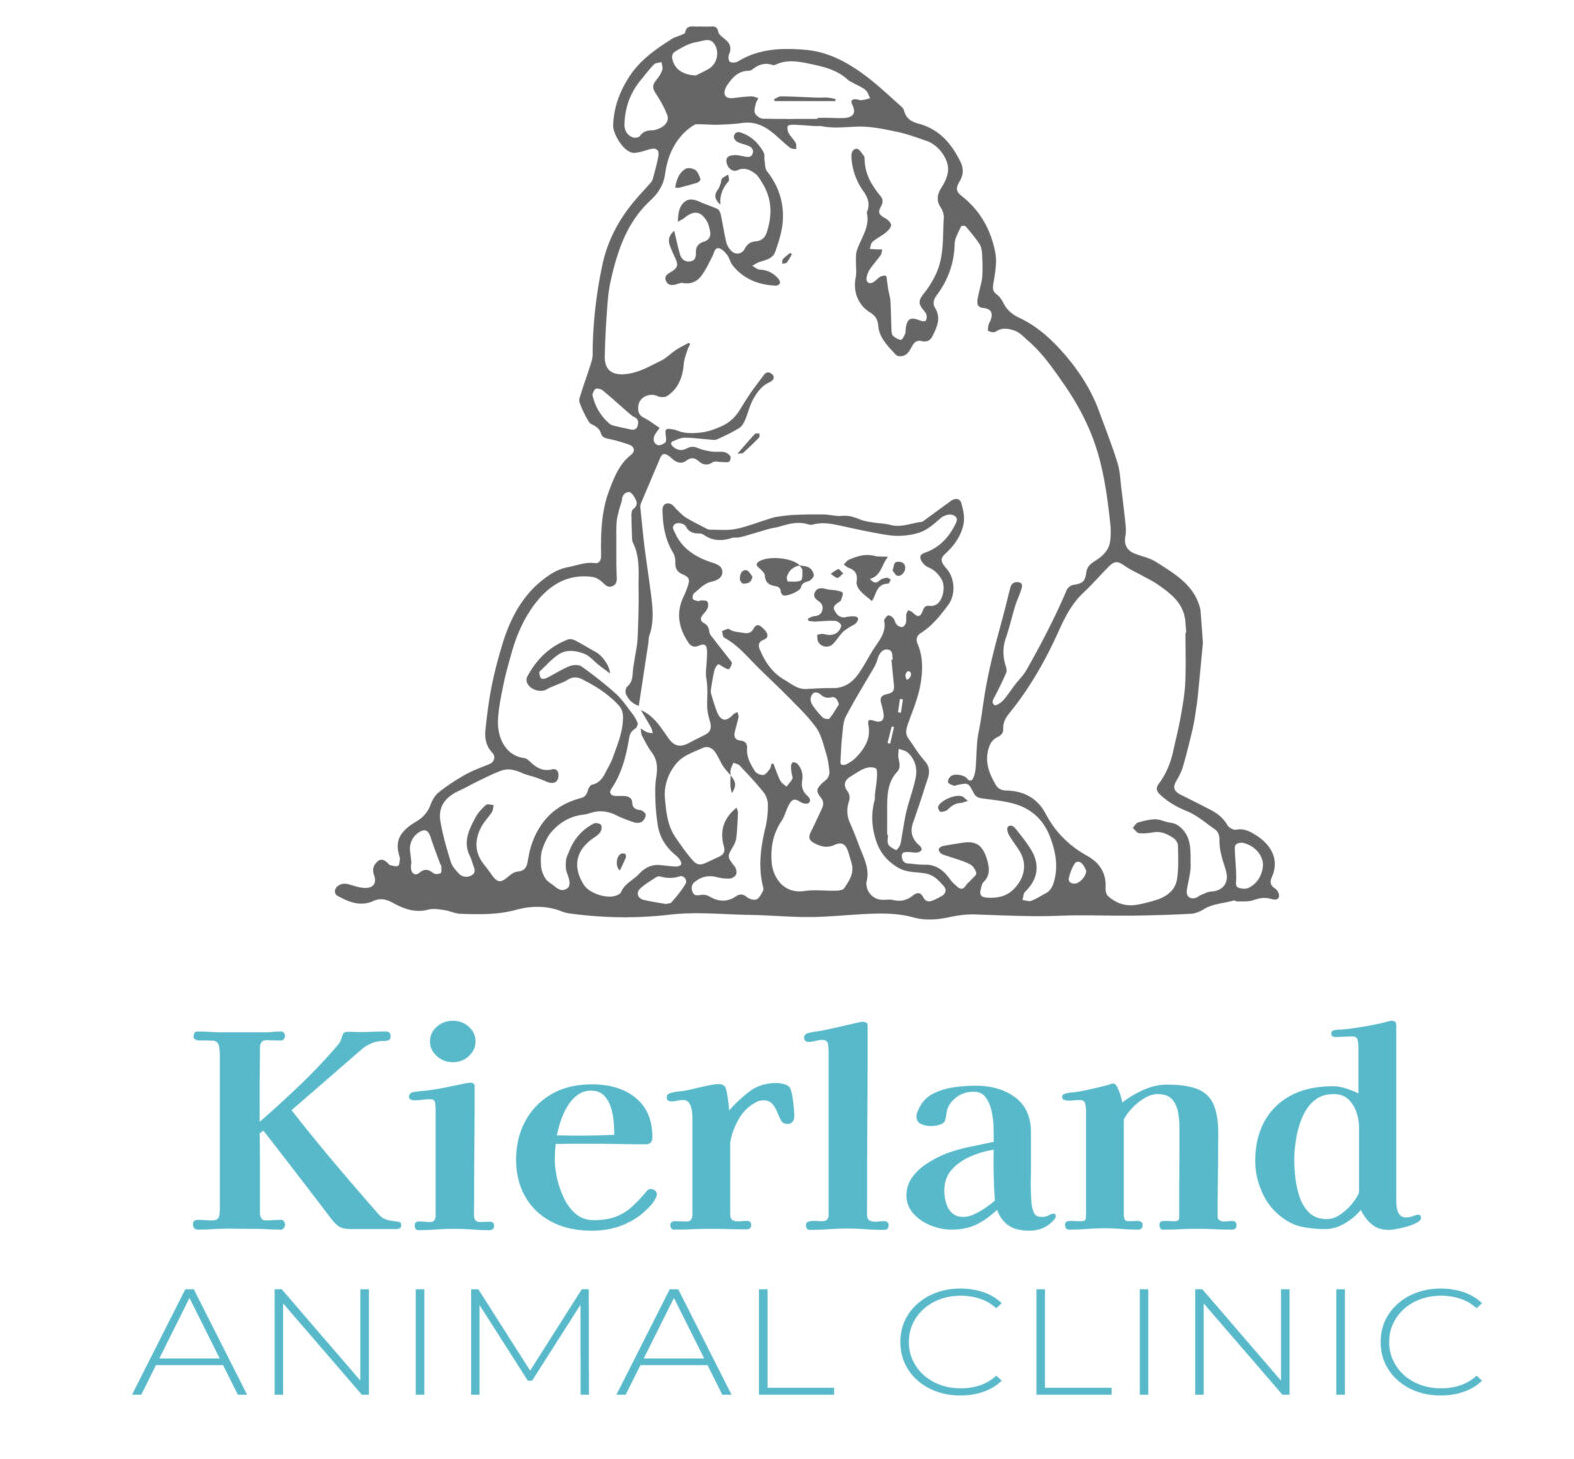 Kierland Animal Clinic Logo